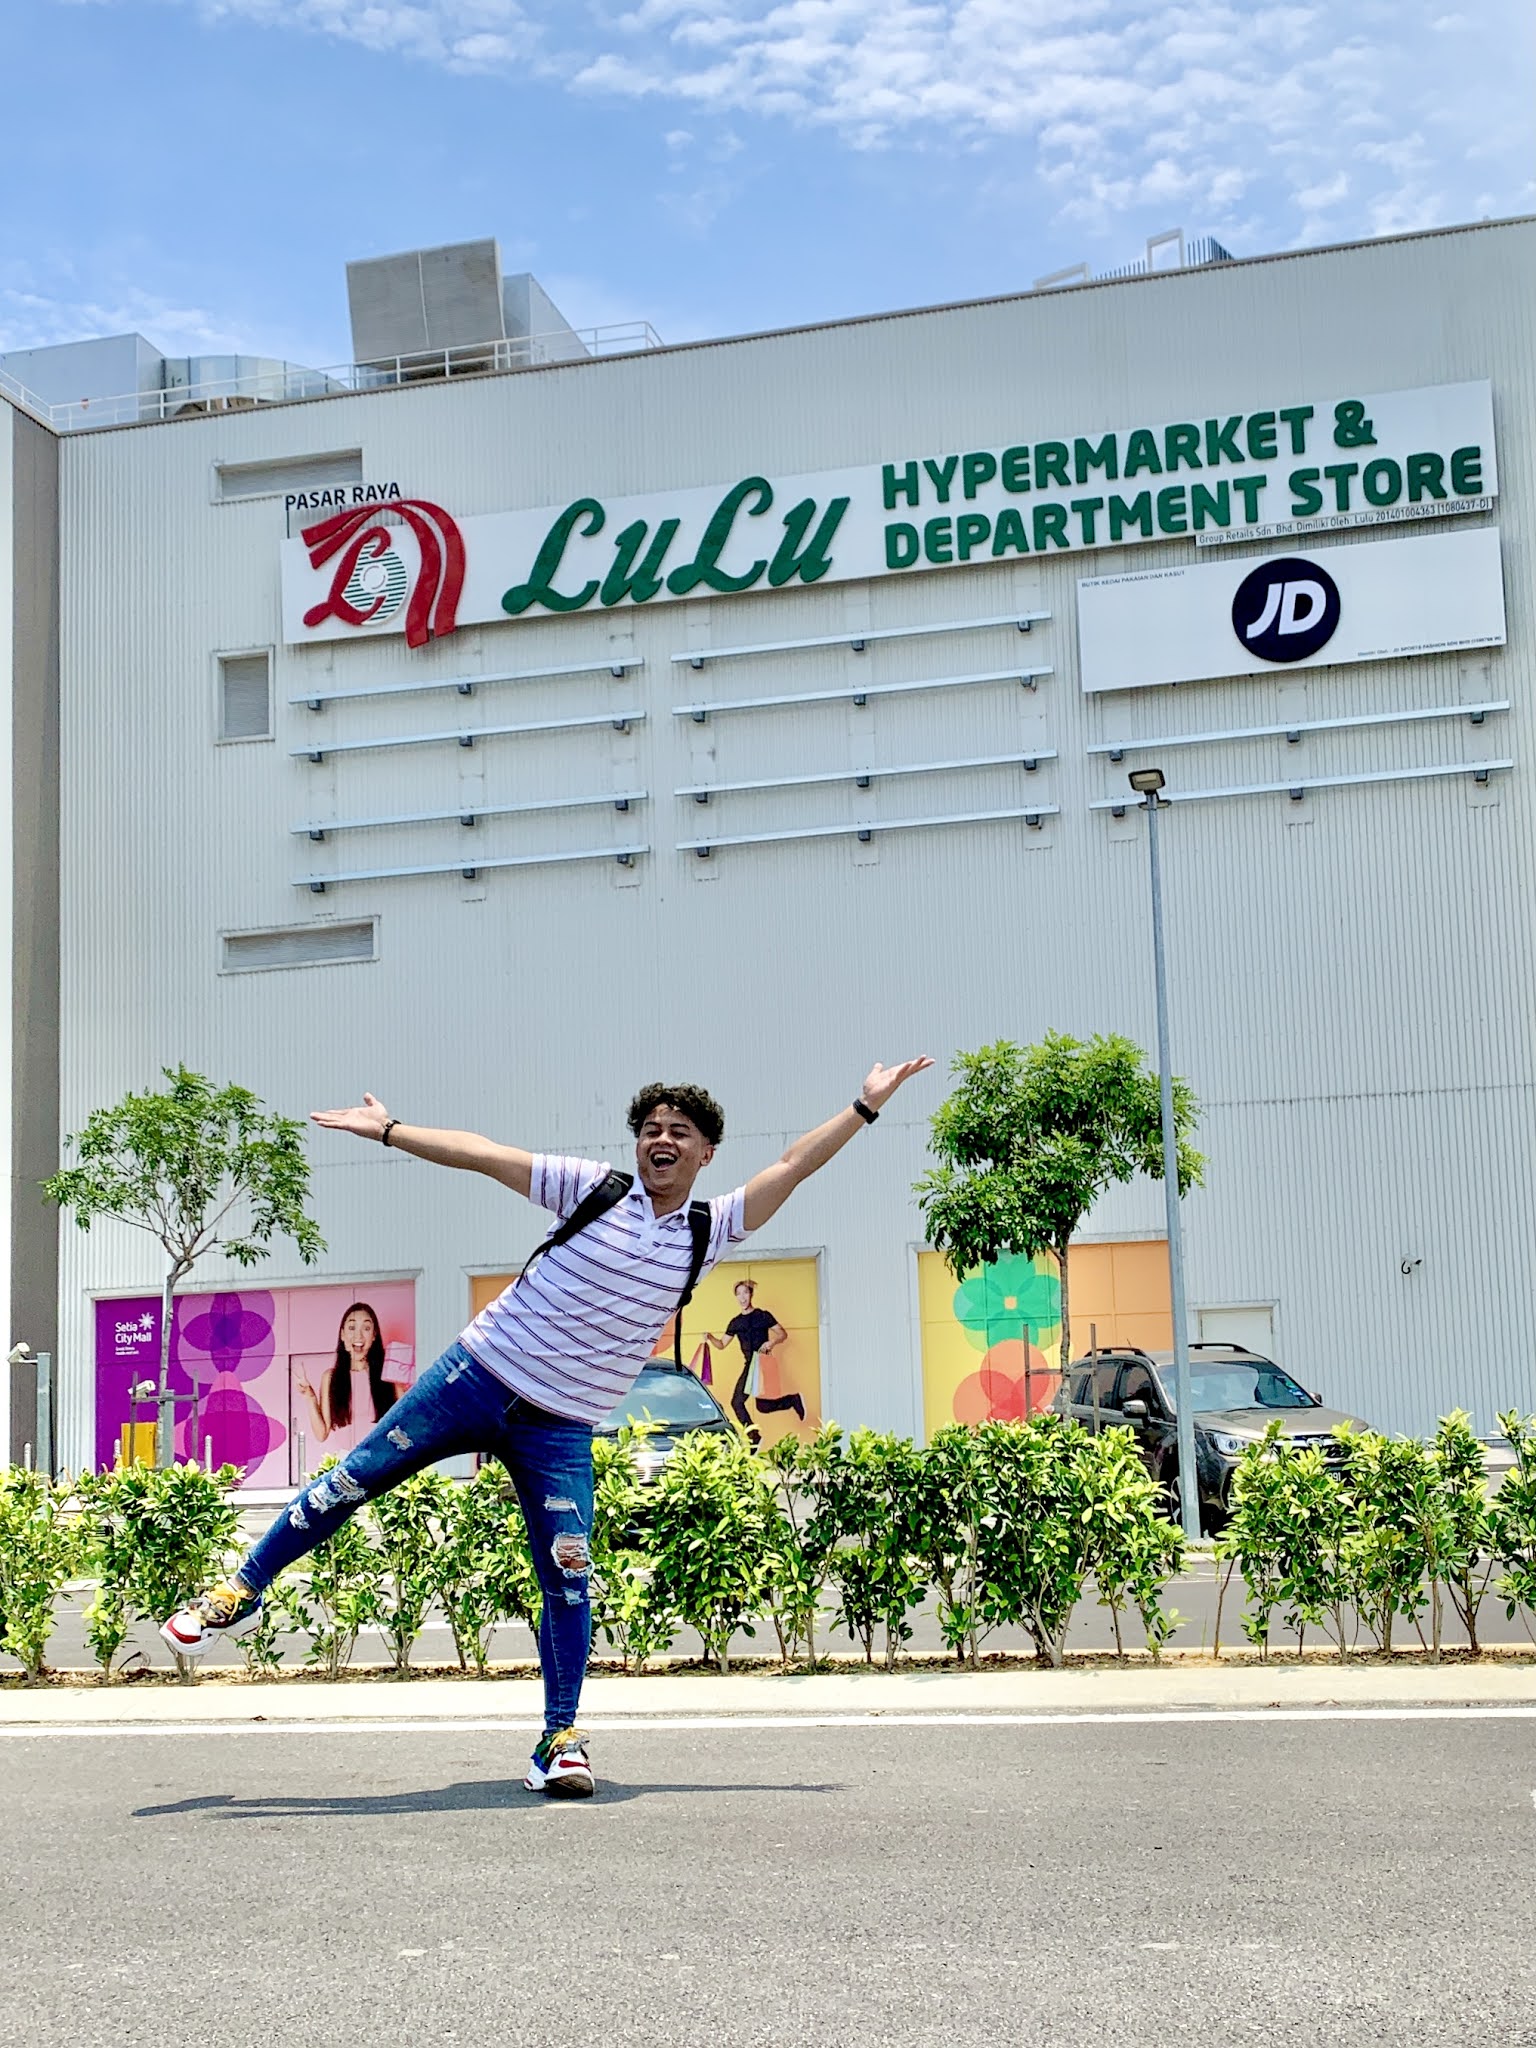 Lulu hypermarket setia city mall